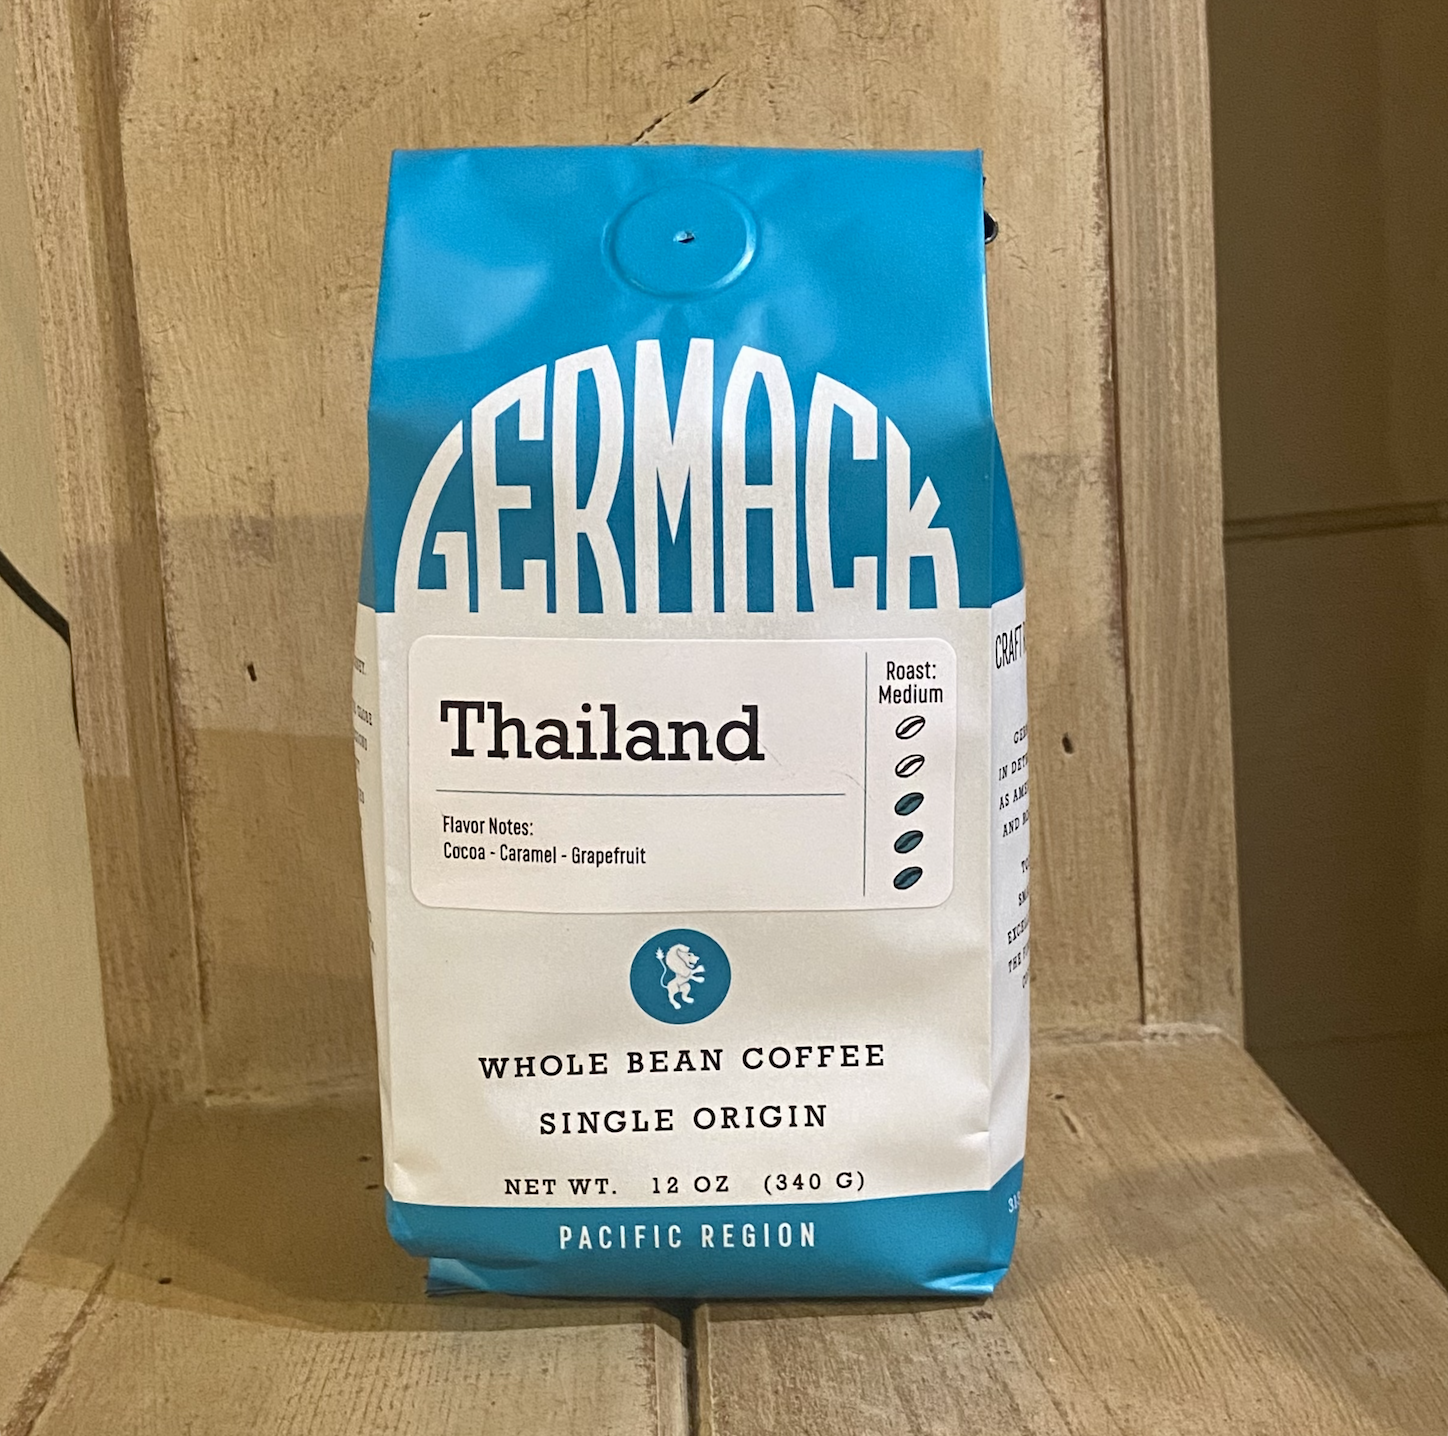 Picture Germack Coffee (12 oz.) - Thailand Mae Kha Jan